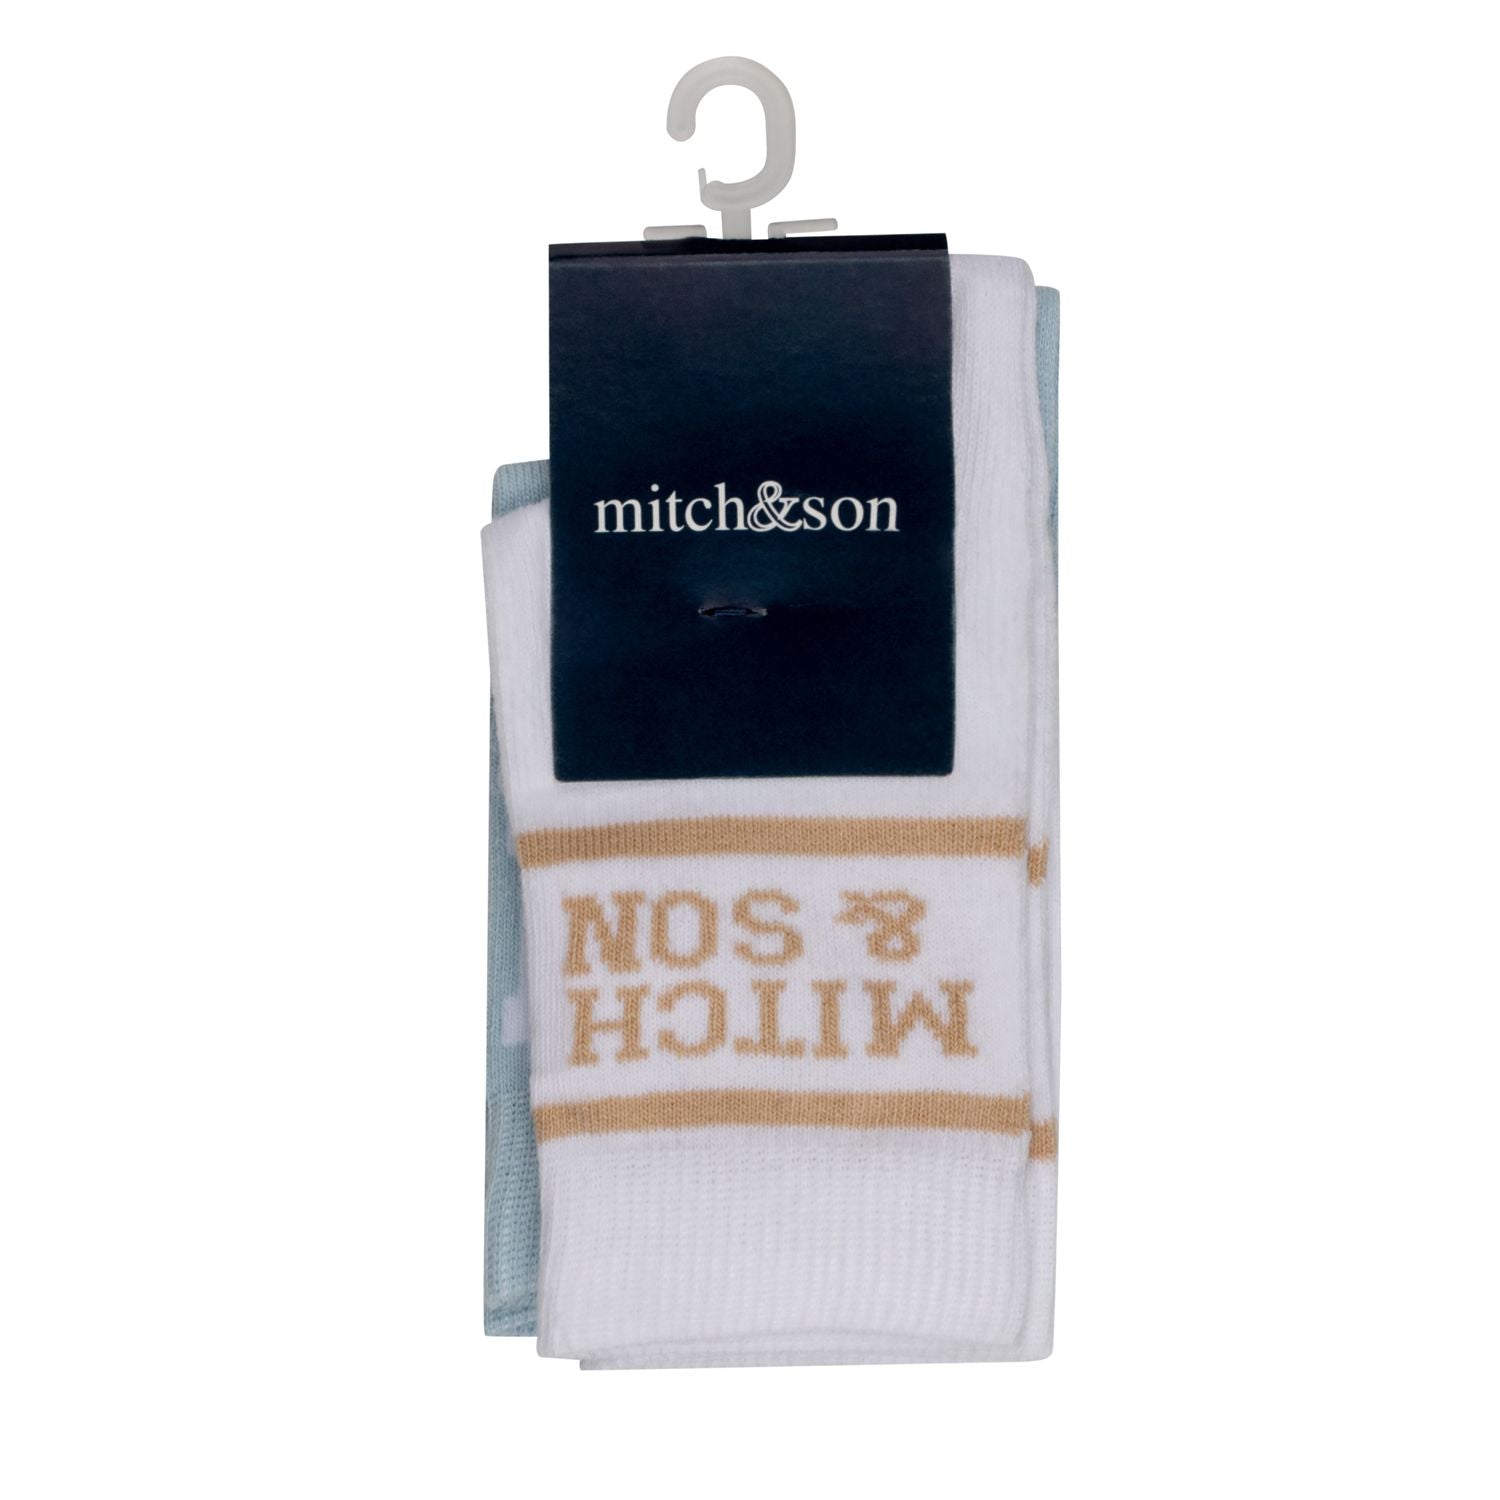 Mitch & Son 2 Pack socks - Tamir